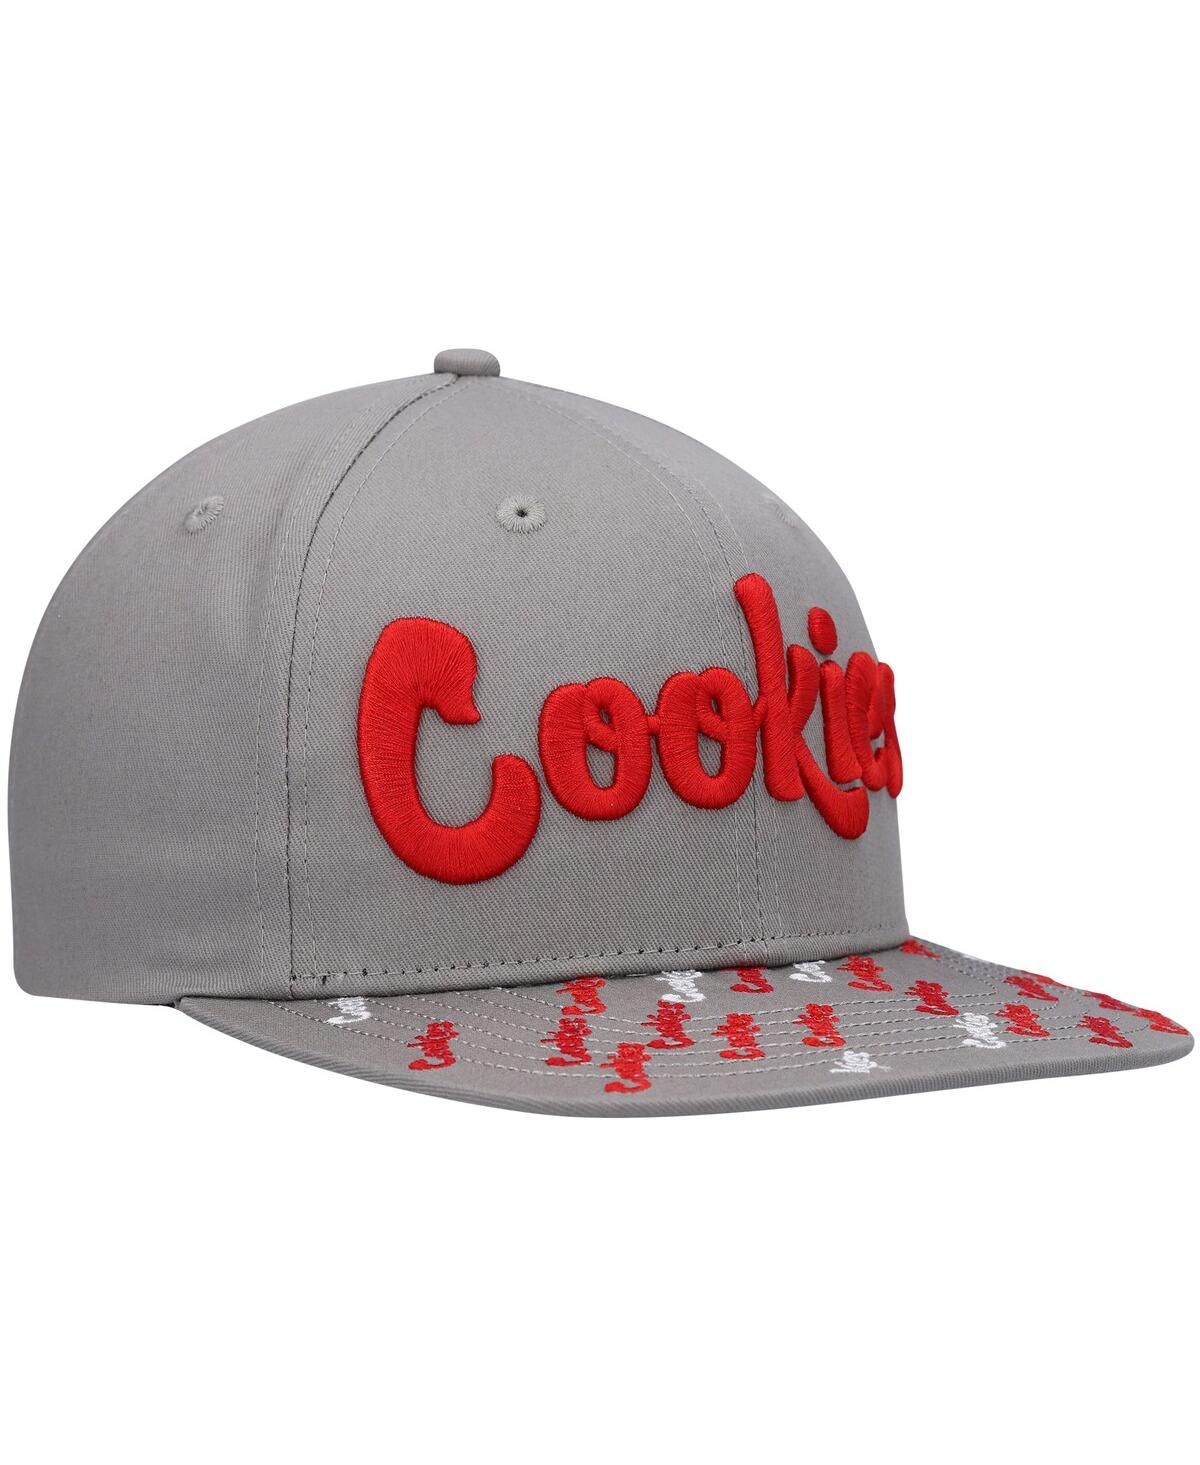 Shop Cookies Men's  Gray Triple Beam Snapback Hat